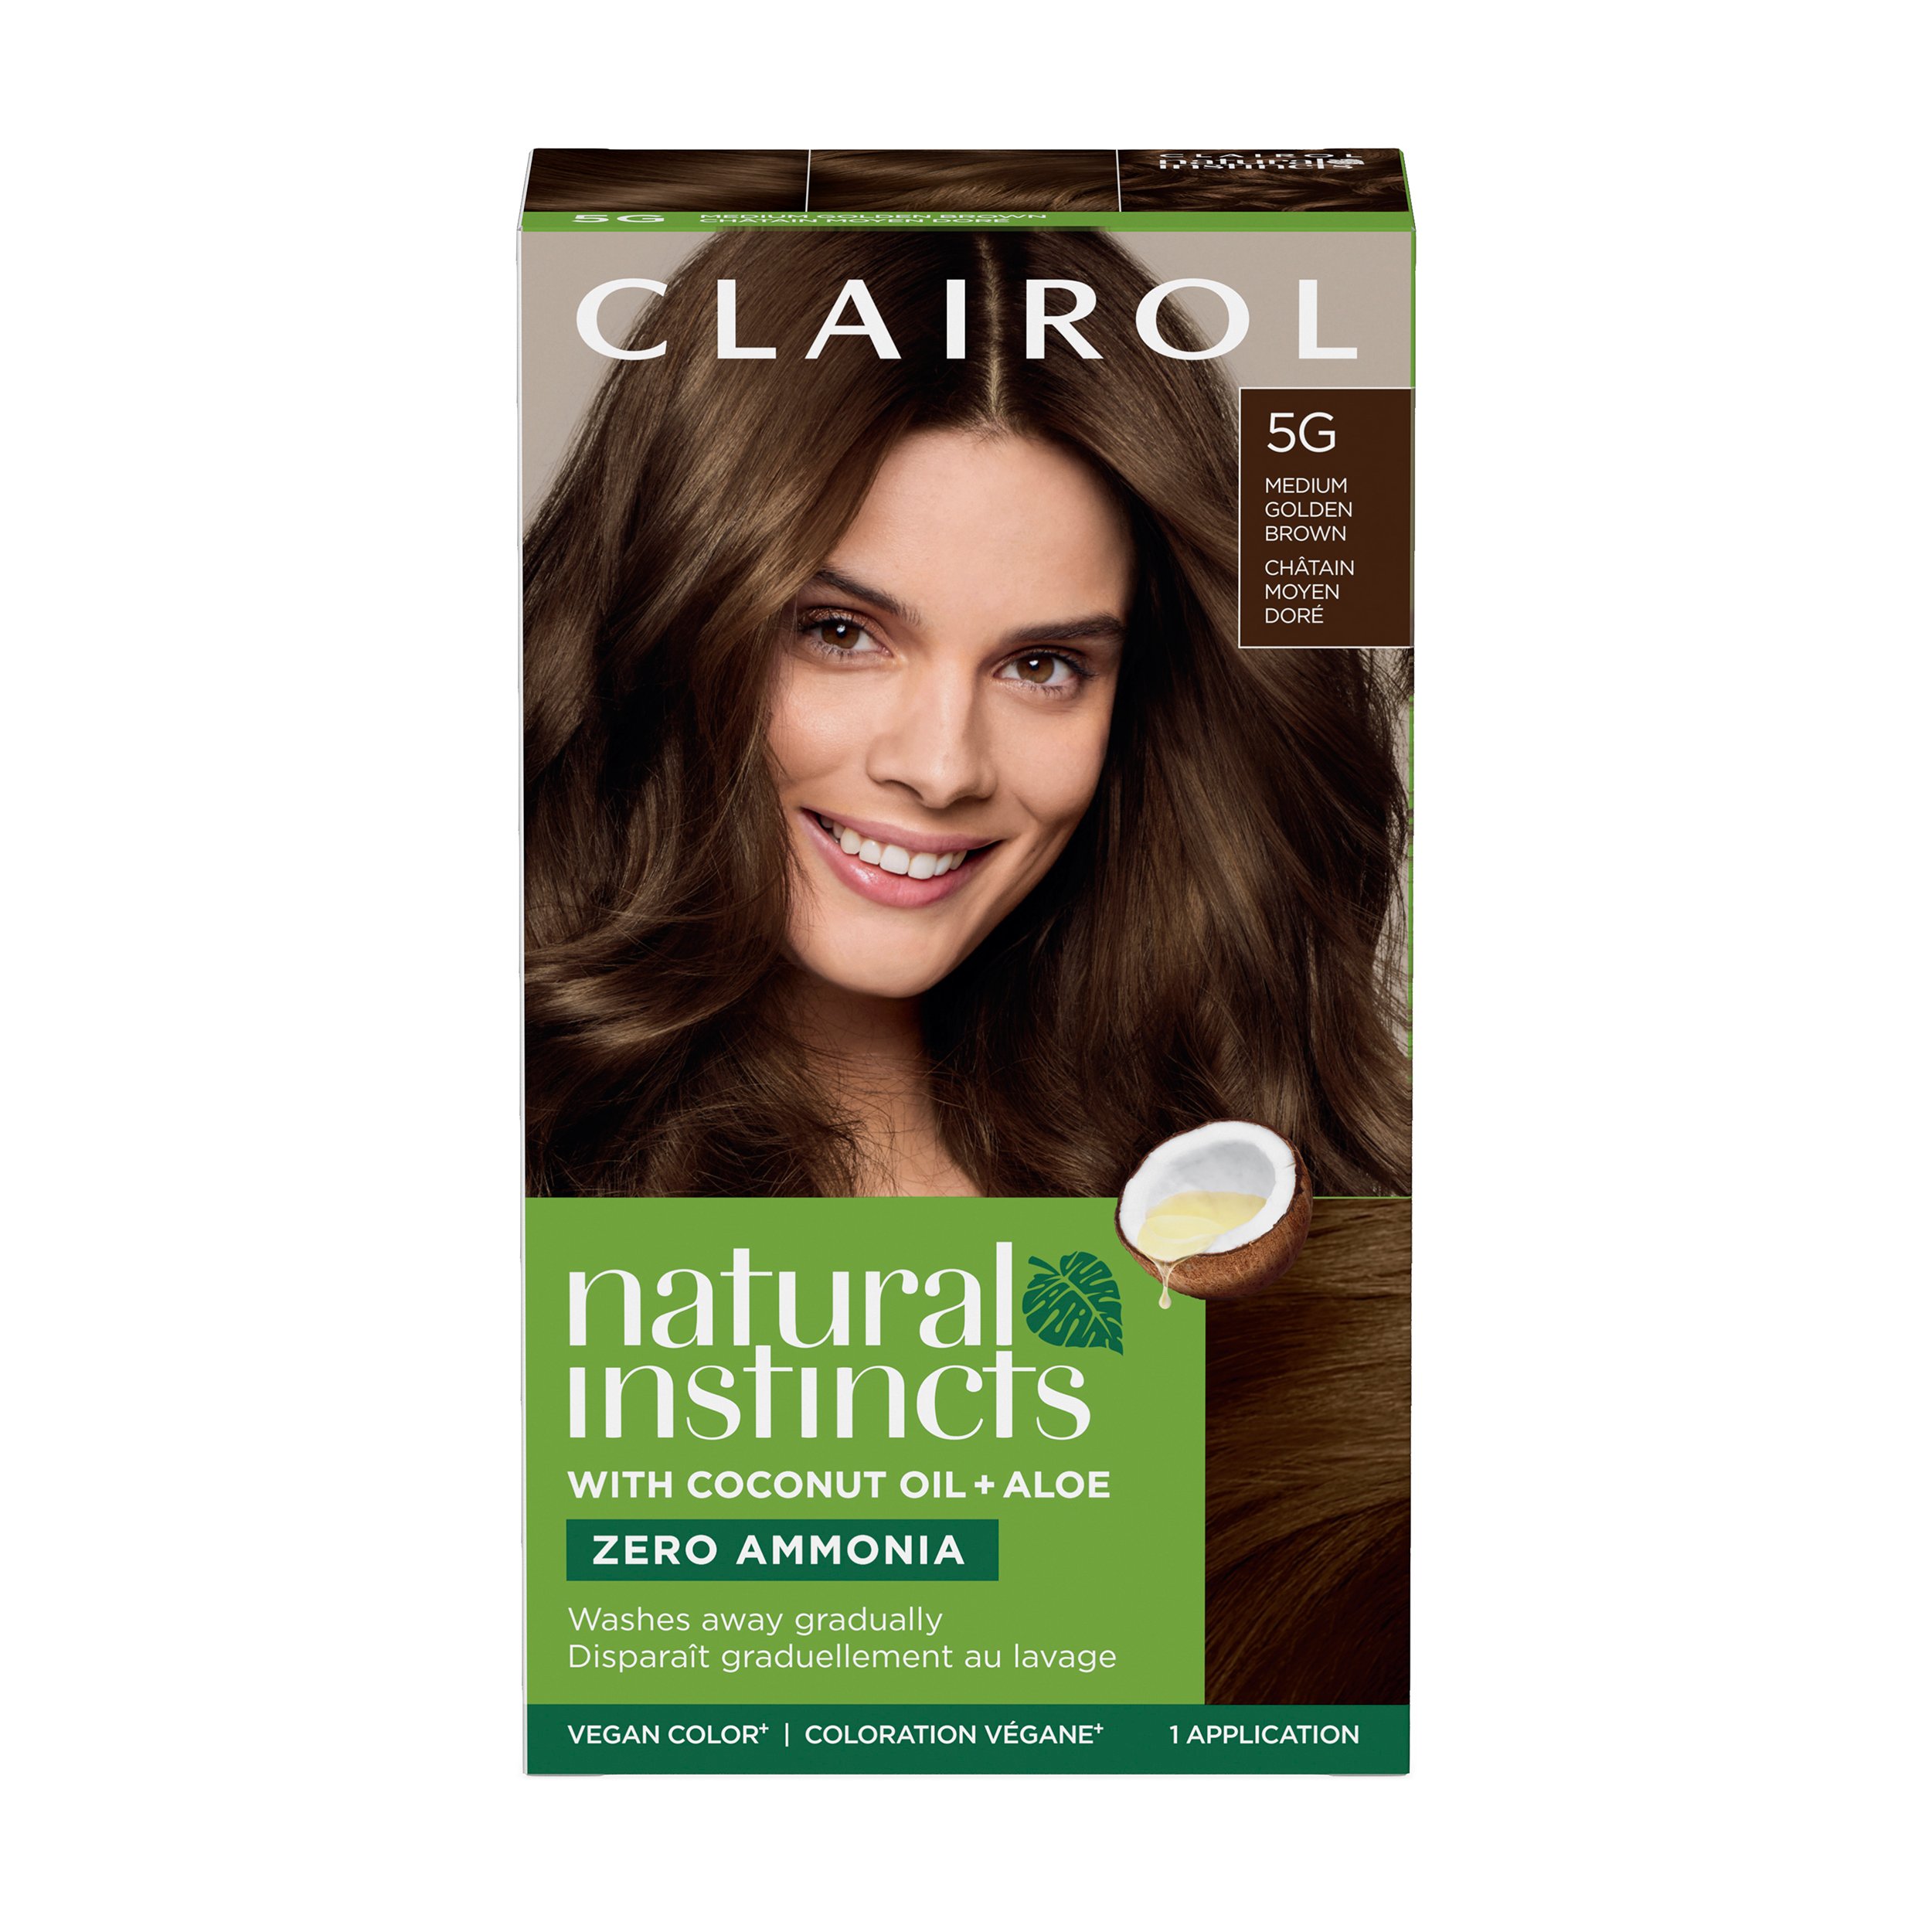 clairol-natural-instincts-hair-color-5g-medium-golden-brown-shop